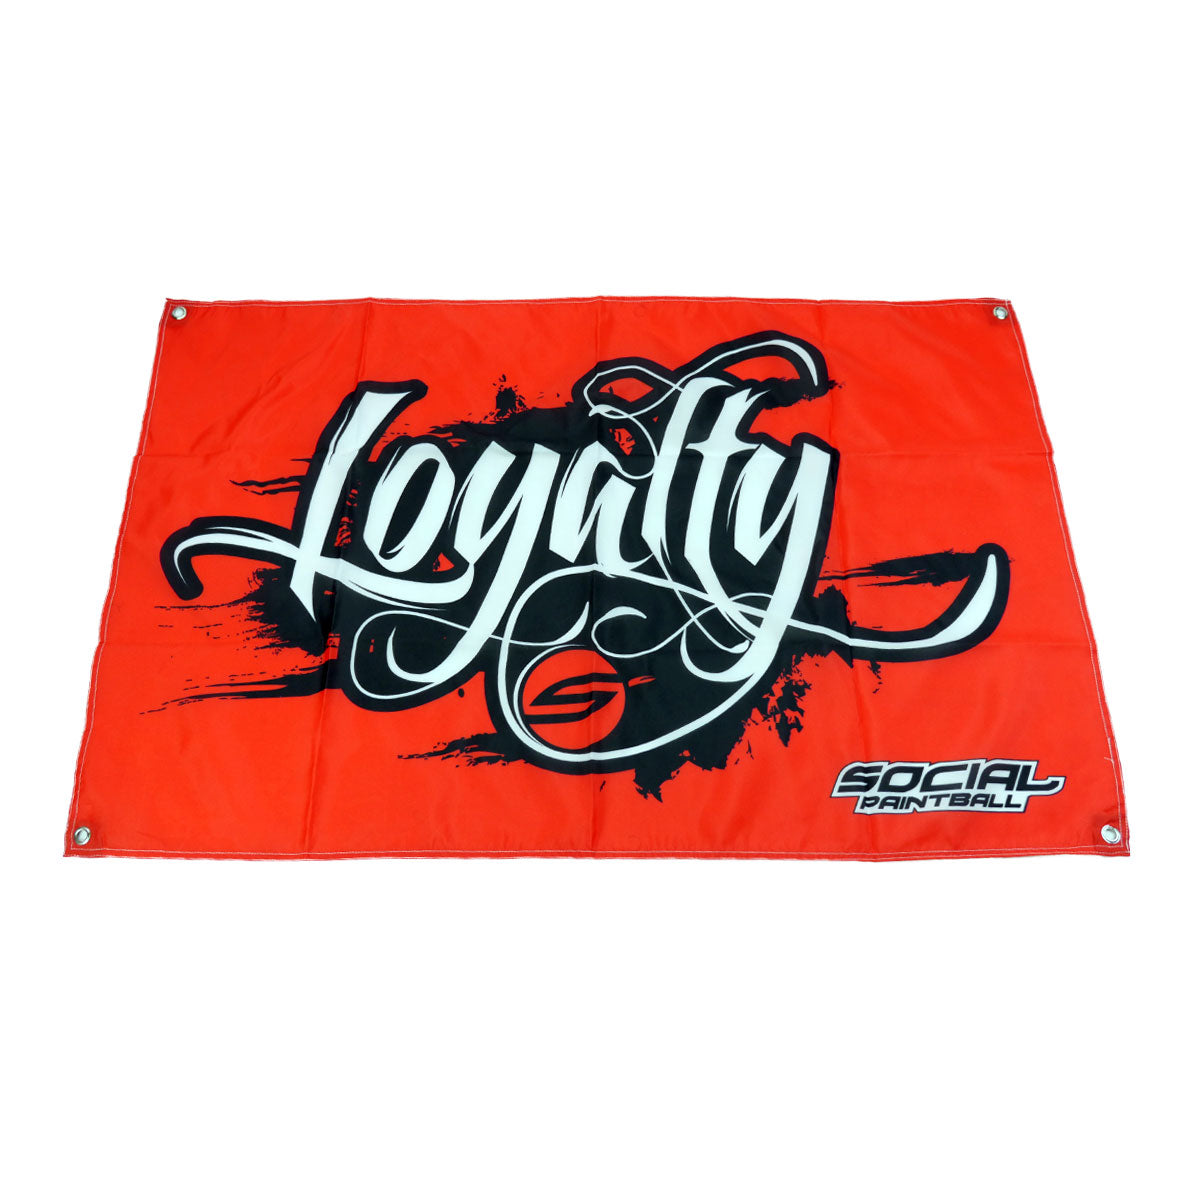 Social Paintball Banner - Loyalty - Social Paintball